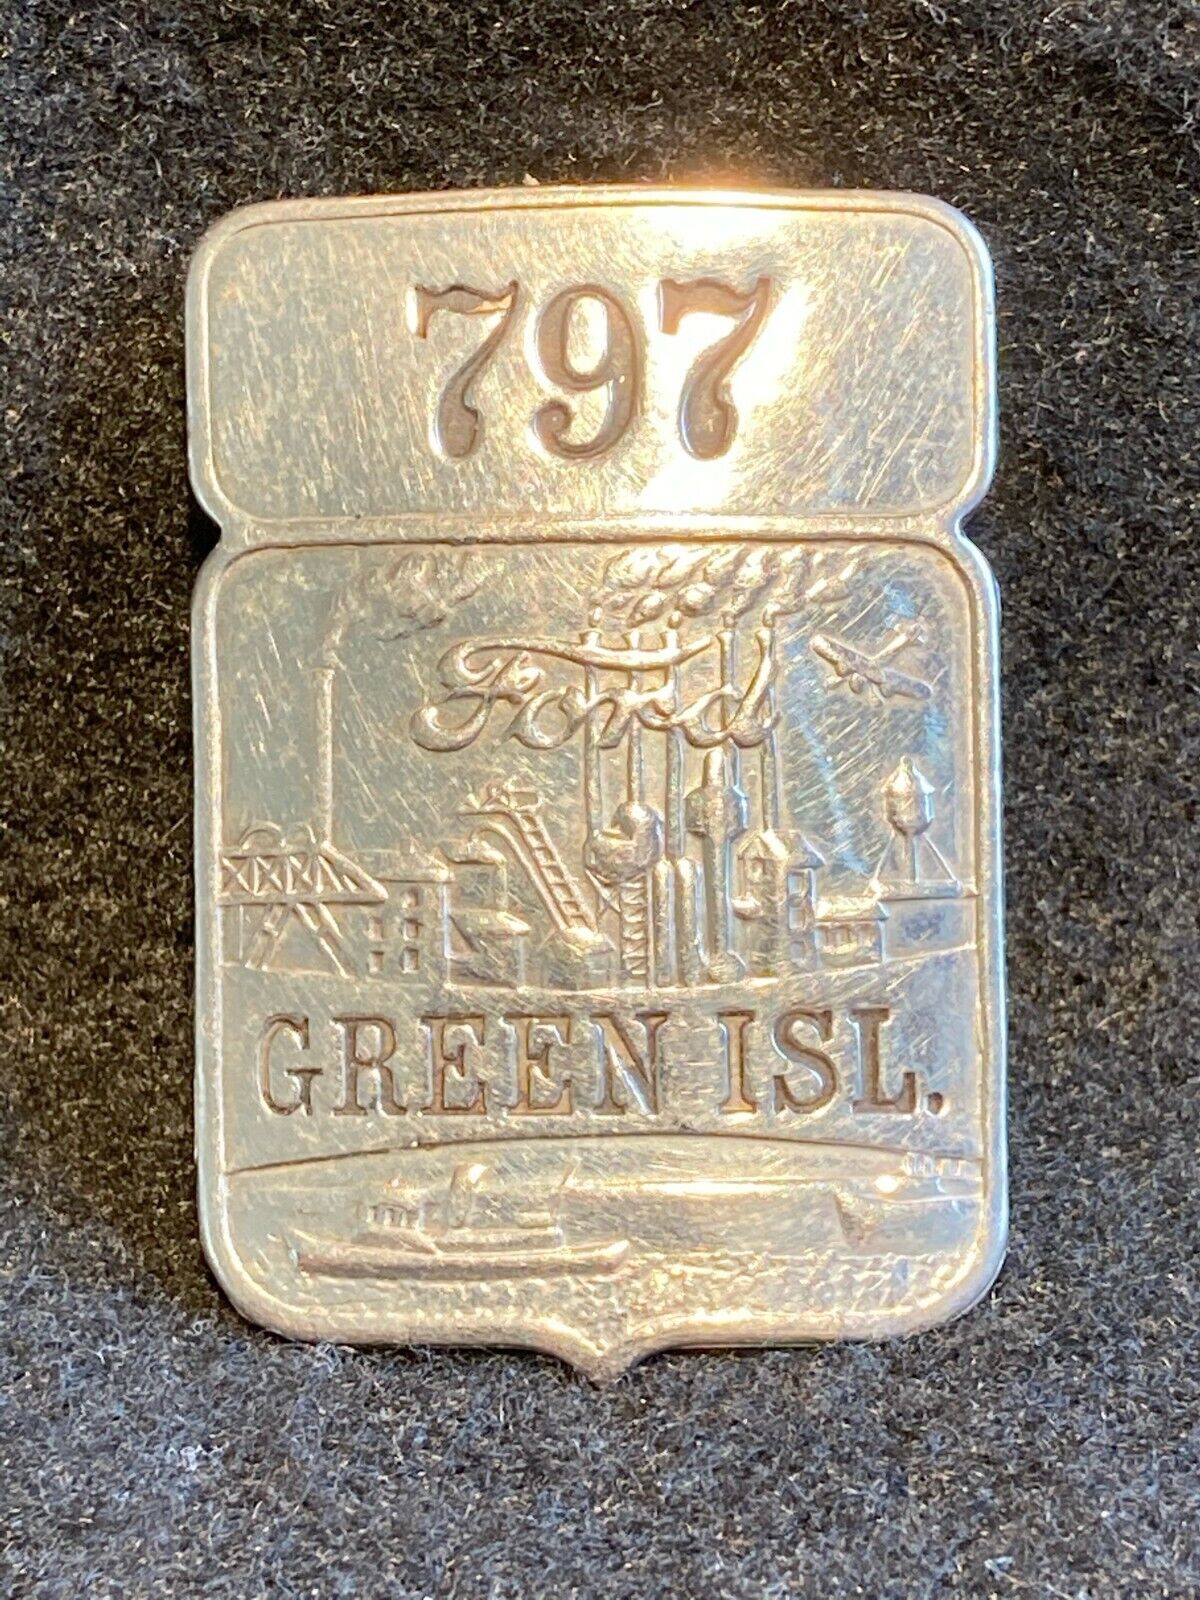 RARE Vintage Ford Employee ID Badge-  GREEN ISL. PLANT- Green Island Plant